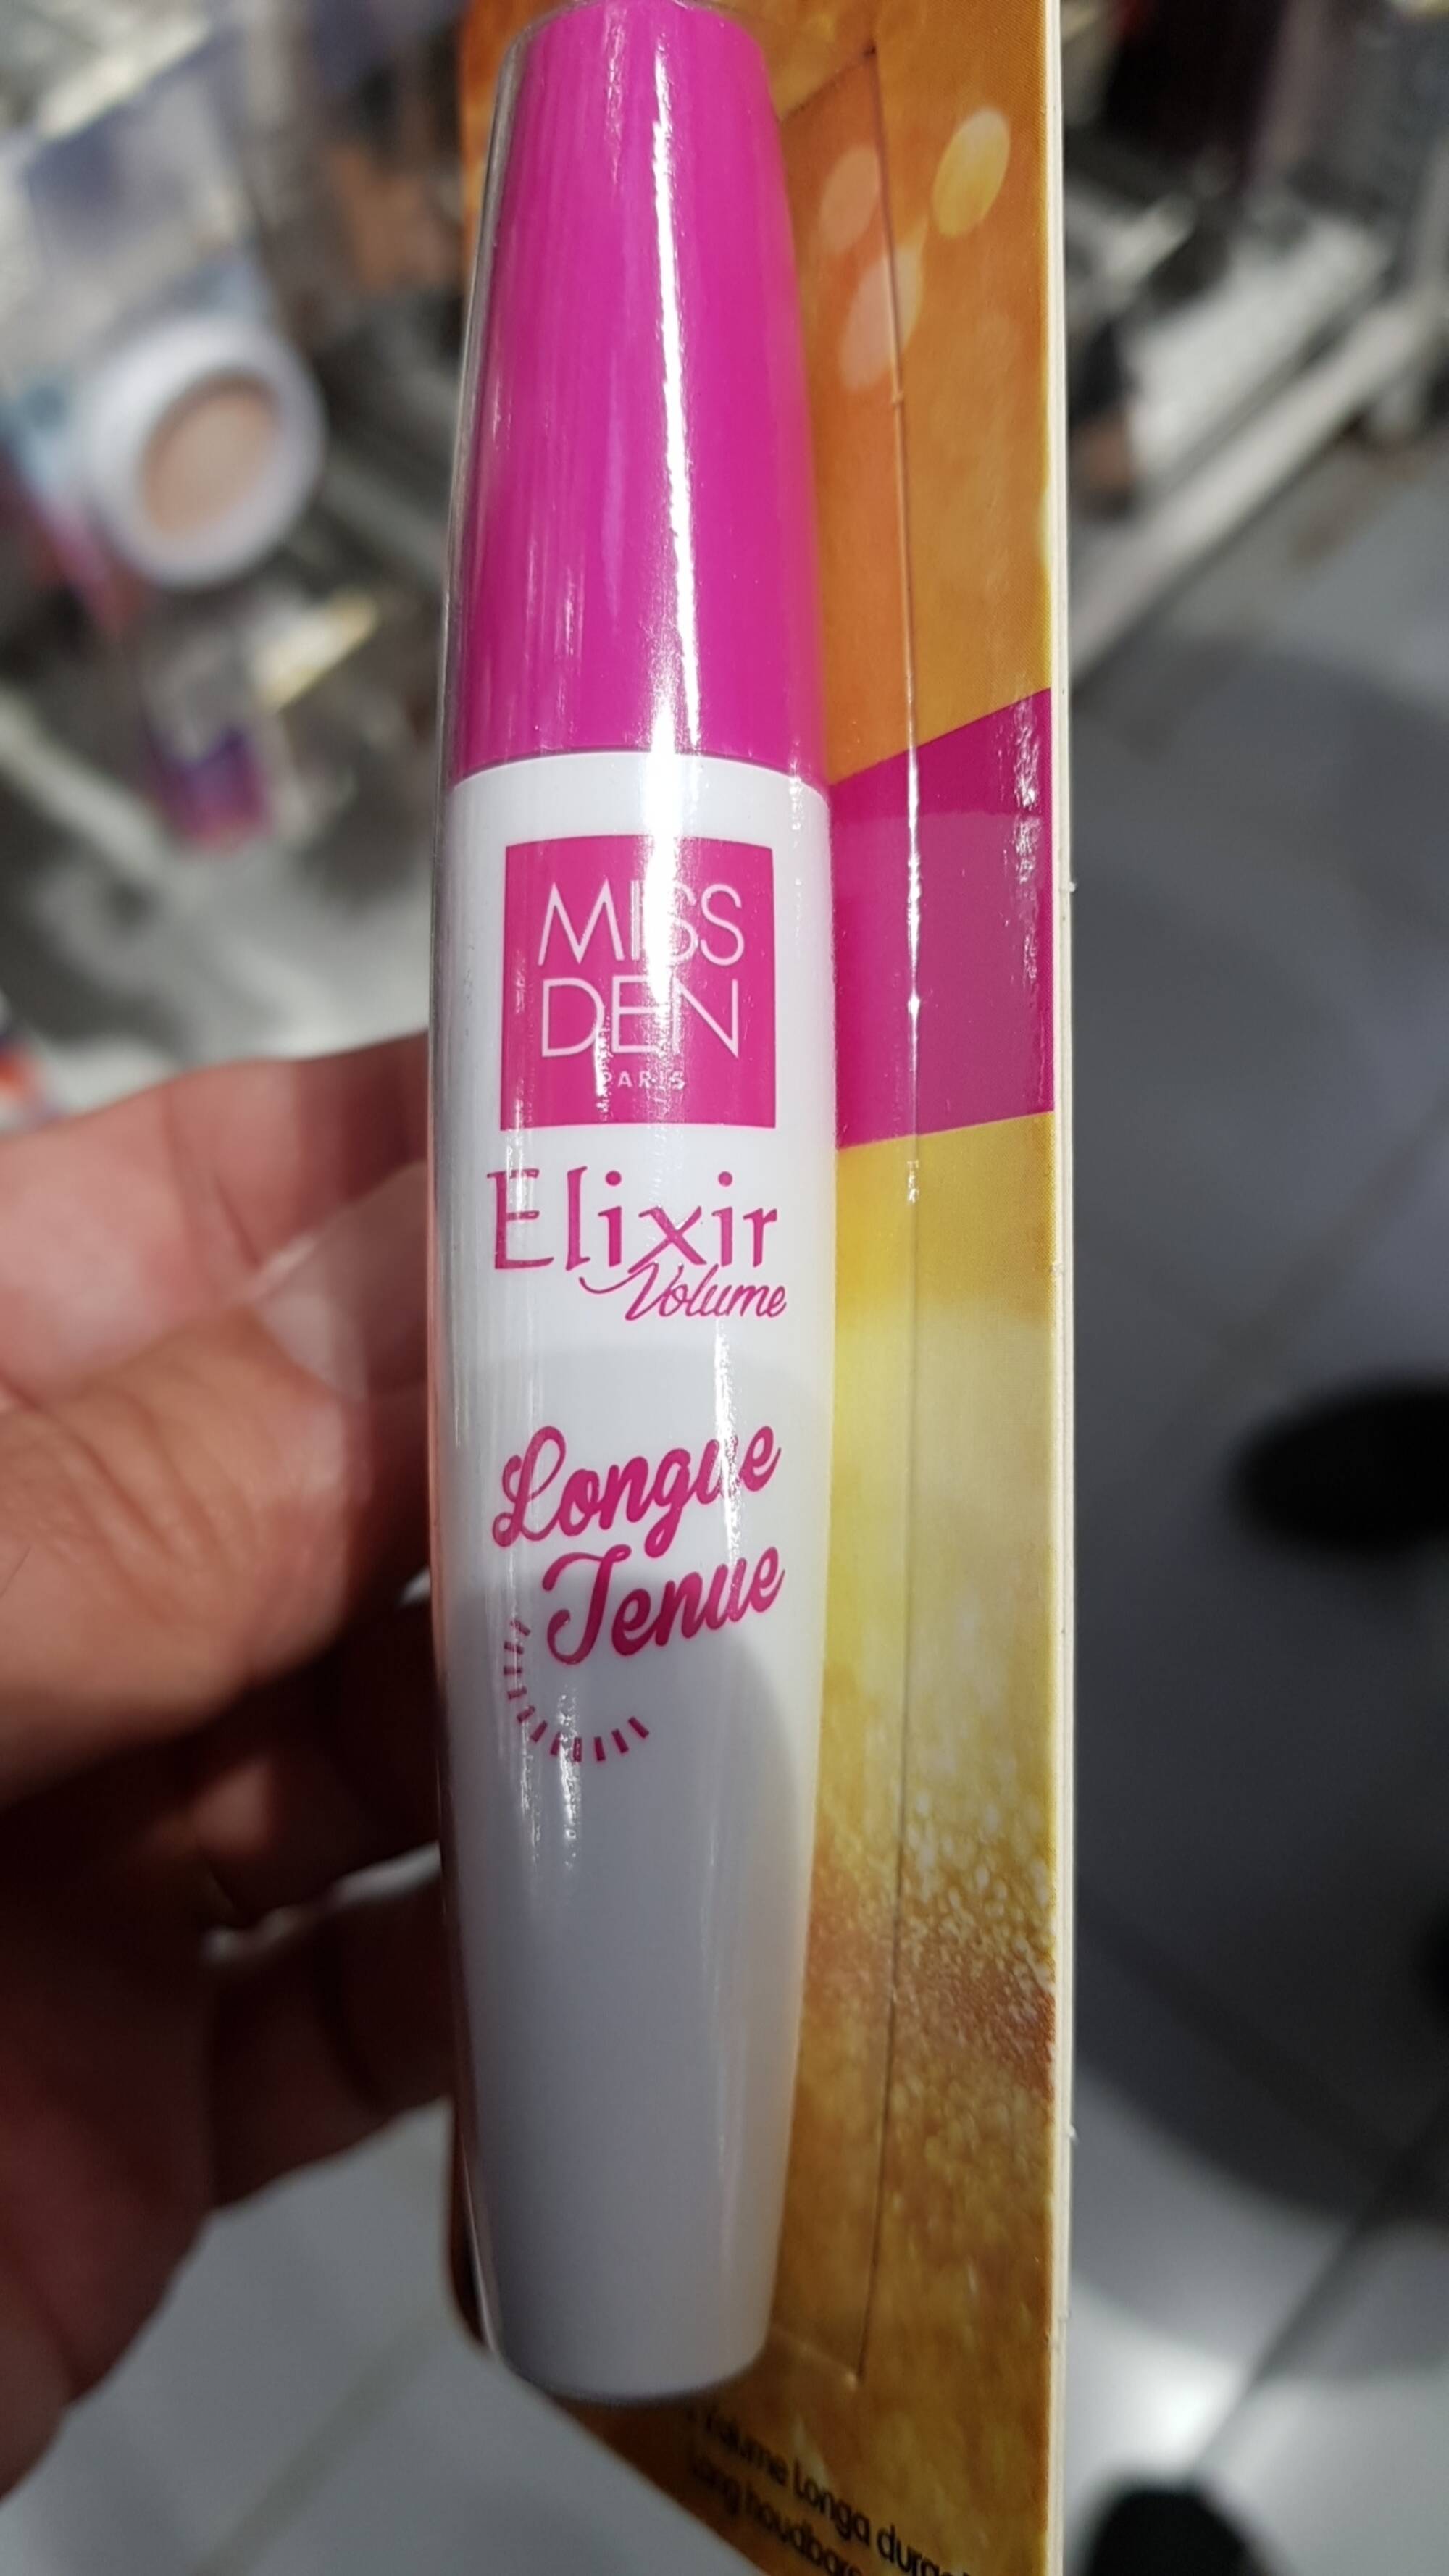 MISS DEN - Elixir volume longue tenue